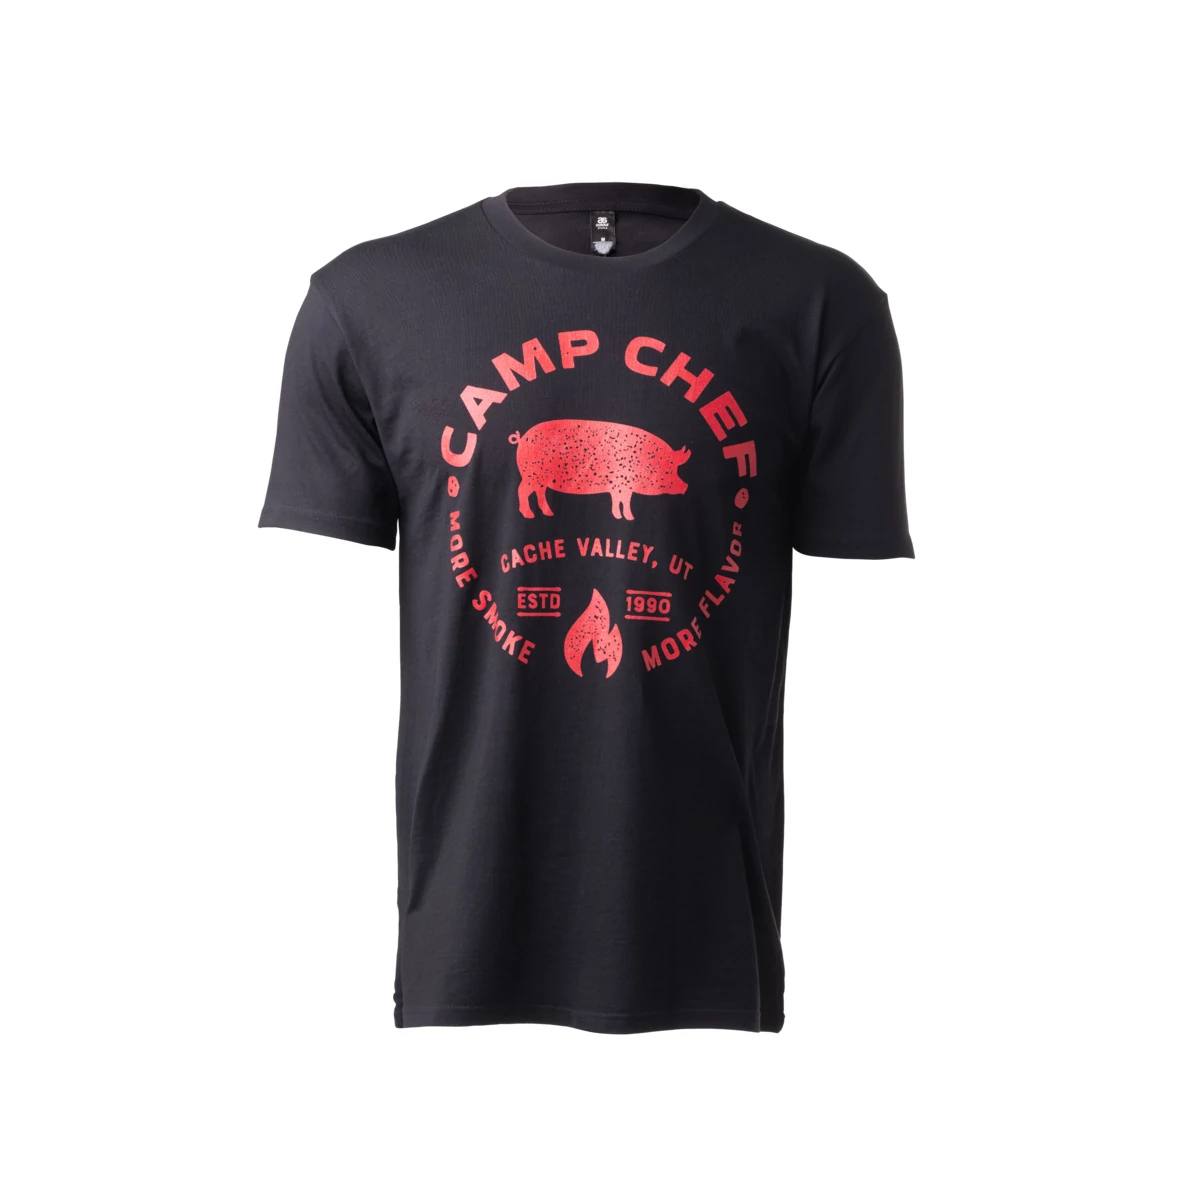 Camp Chef Pork Badge T-Shirt - L